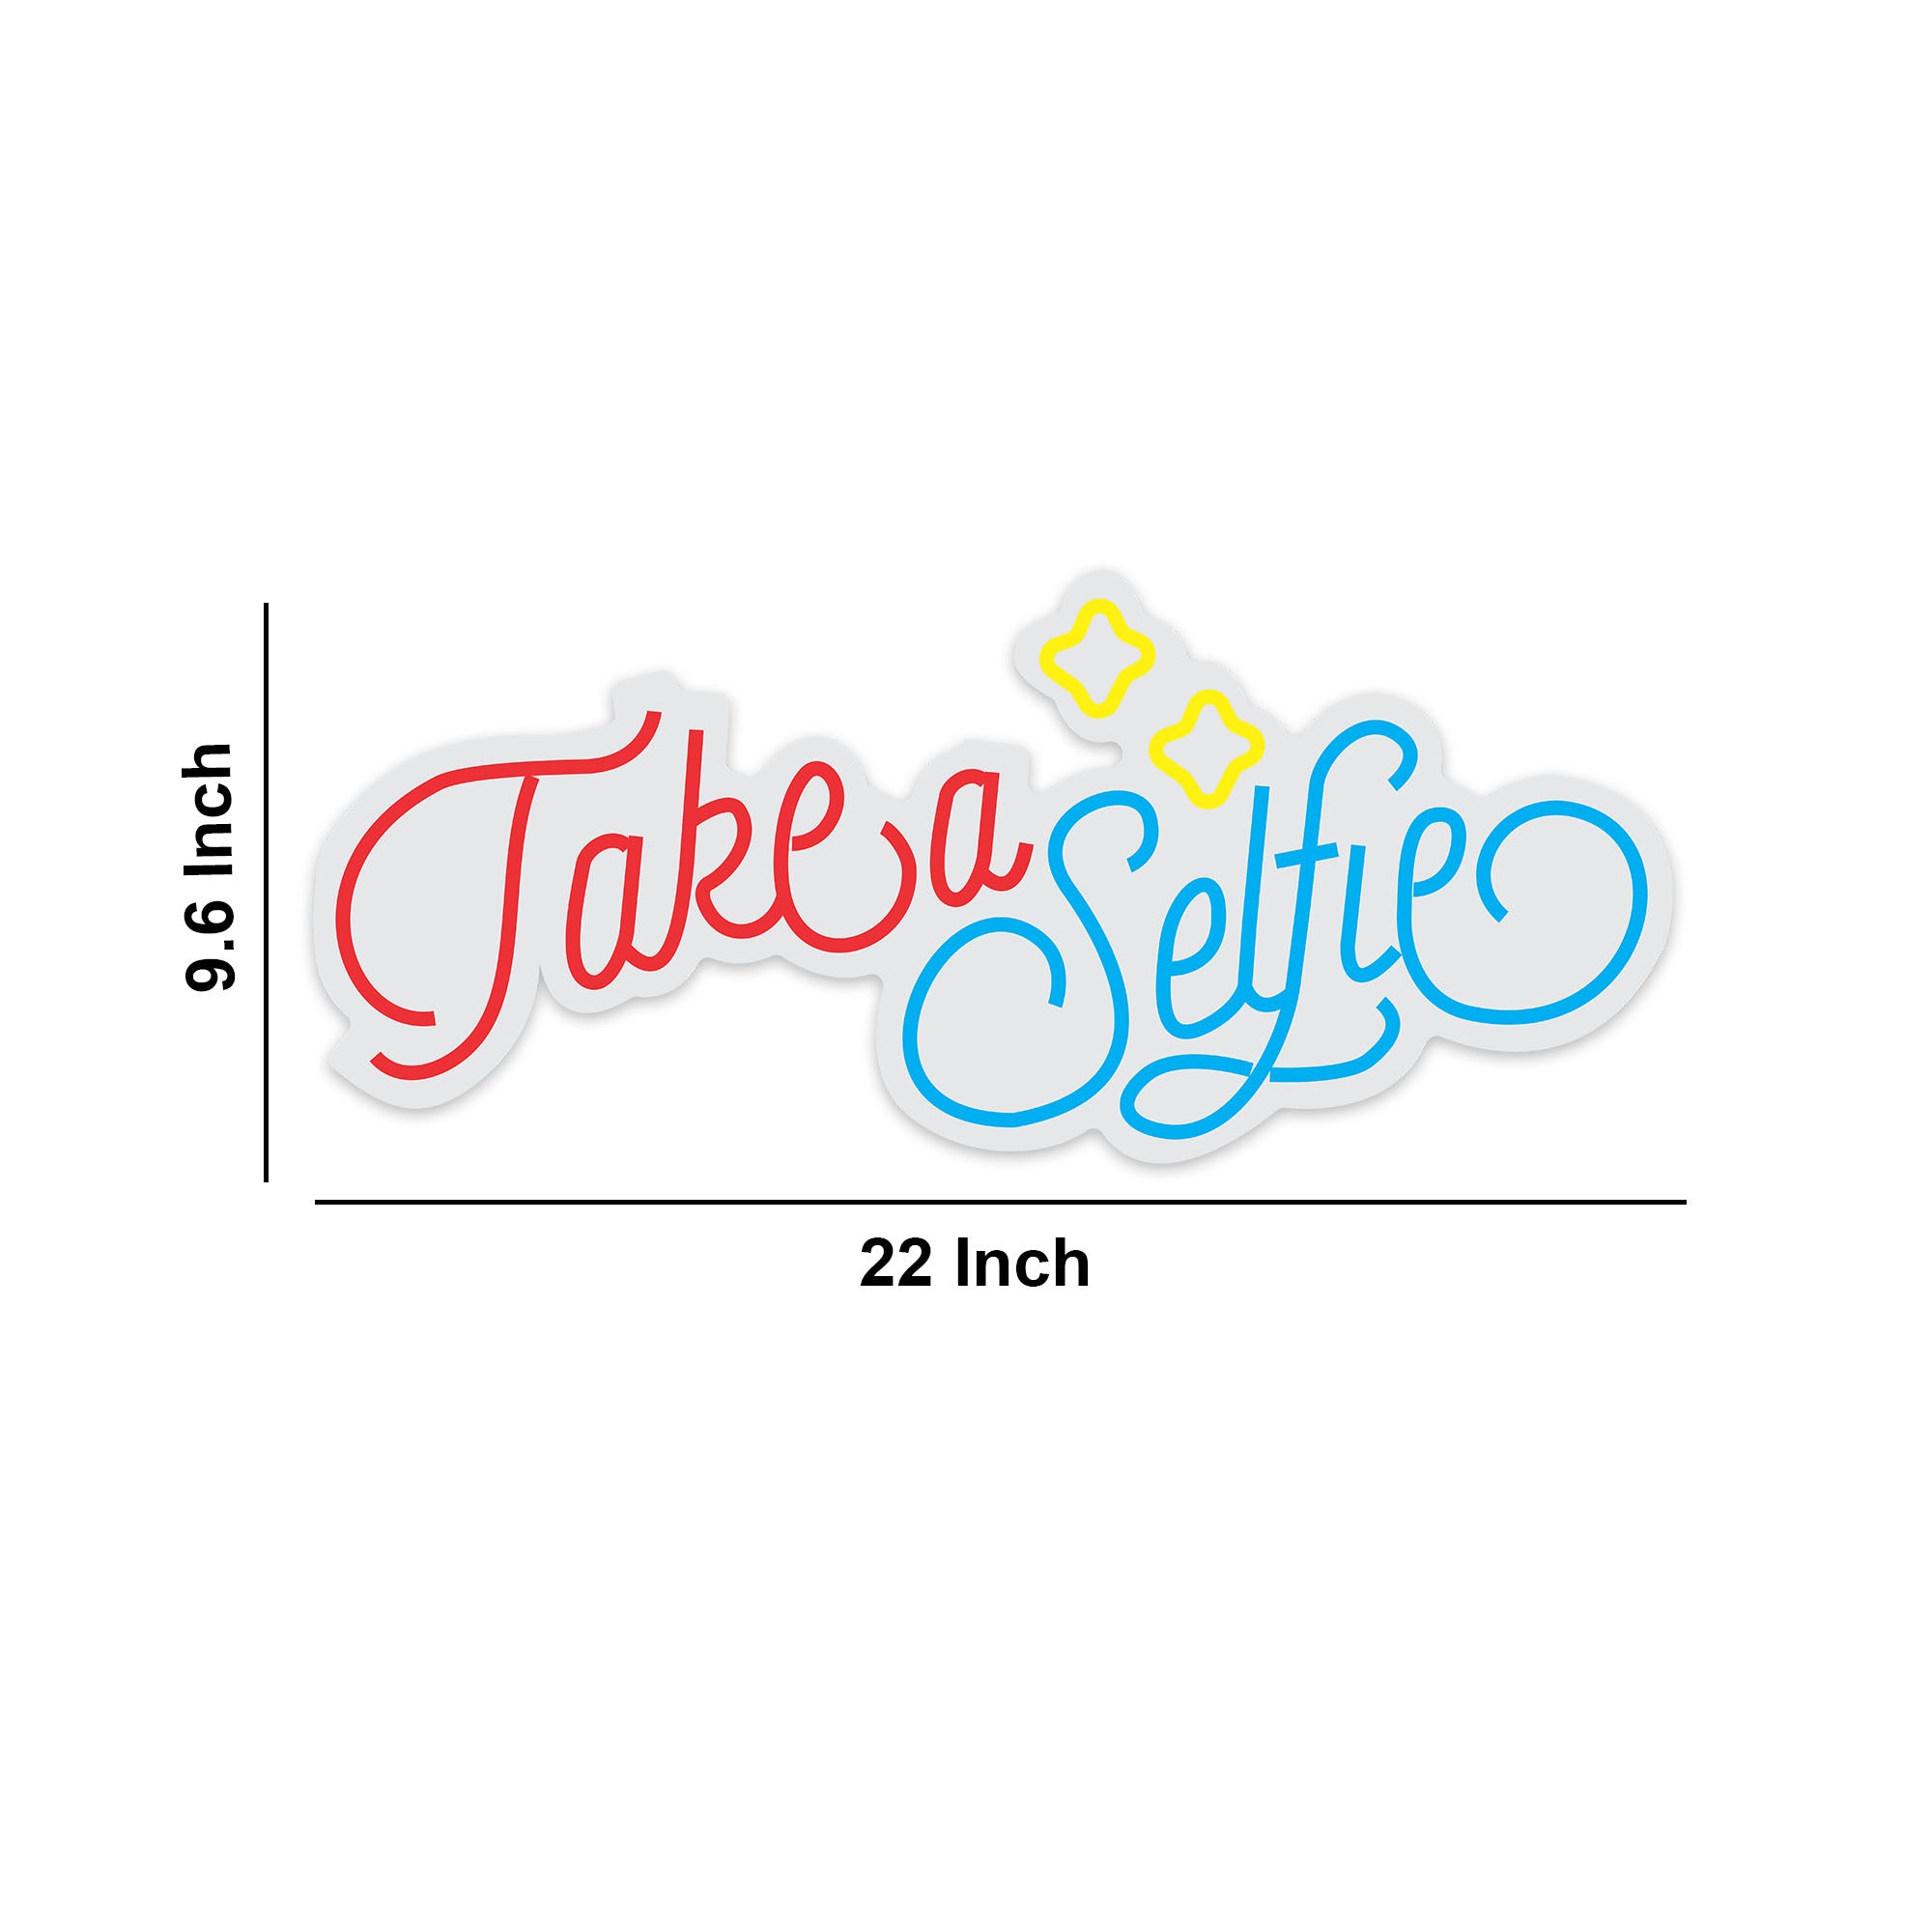 A girl selfie flat design concept - UpLabs